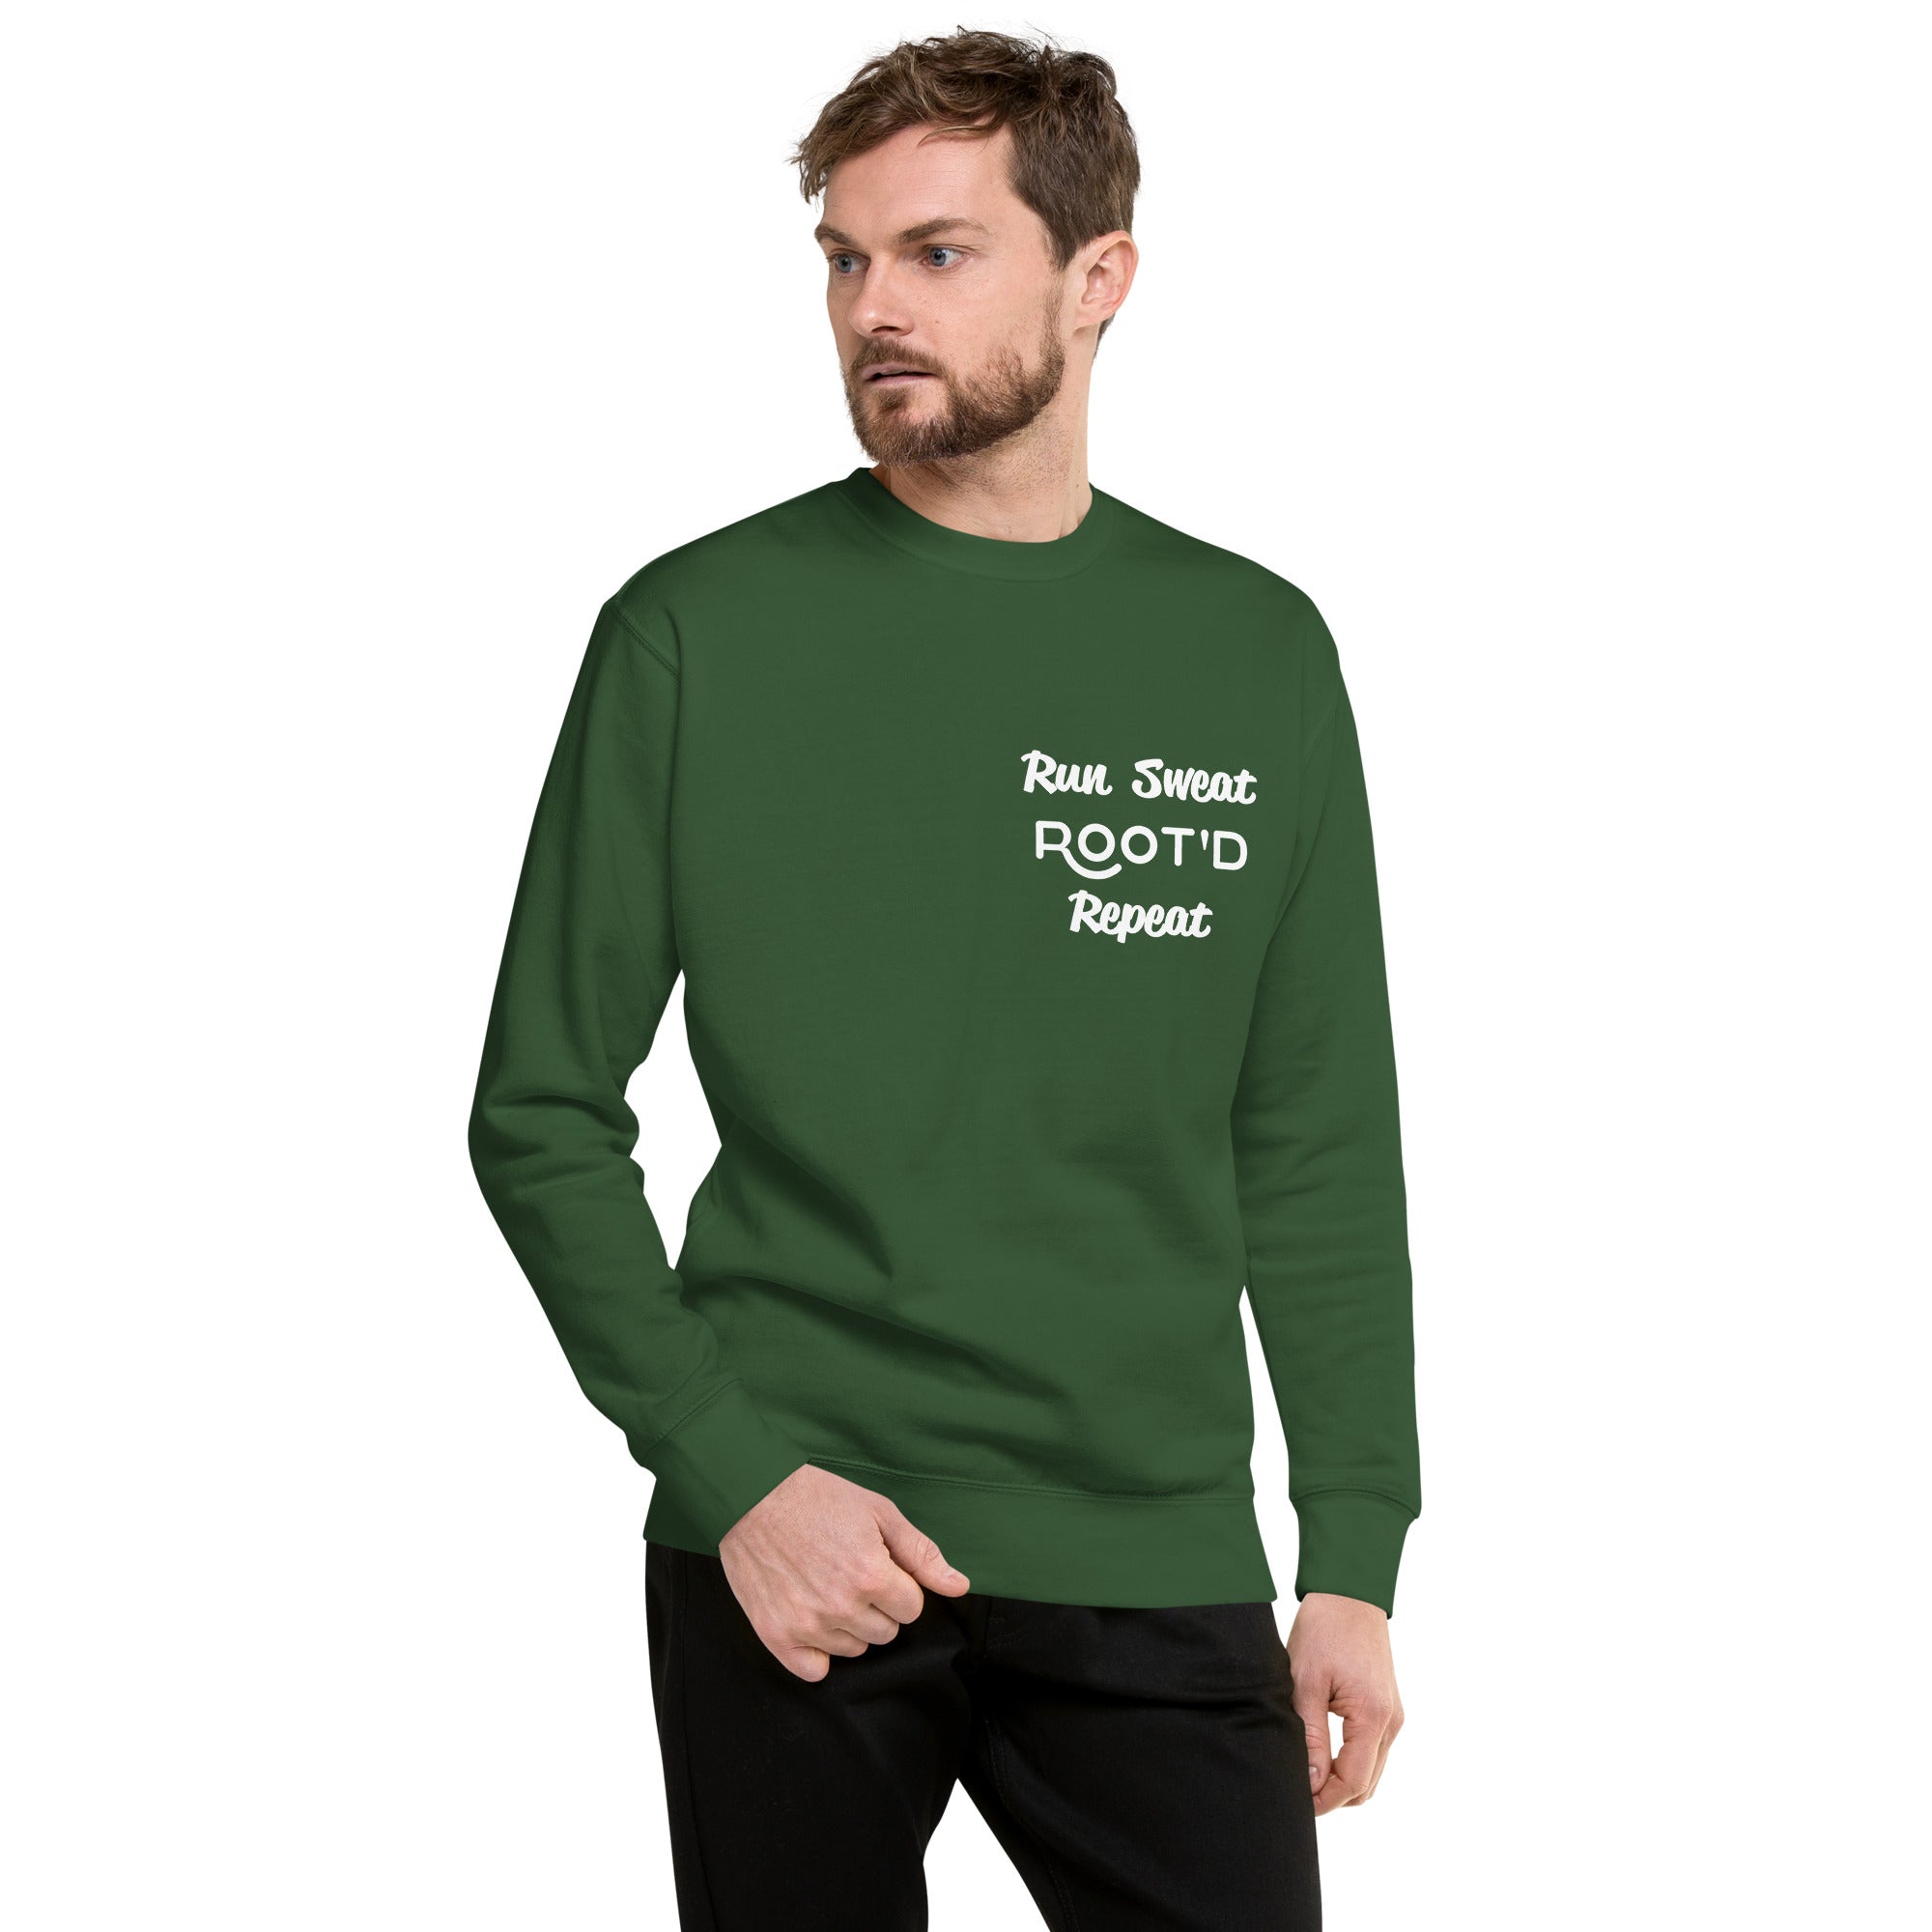 Run Sweat Root'd Repeat Premium Sweatshirt - Unisex